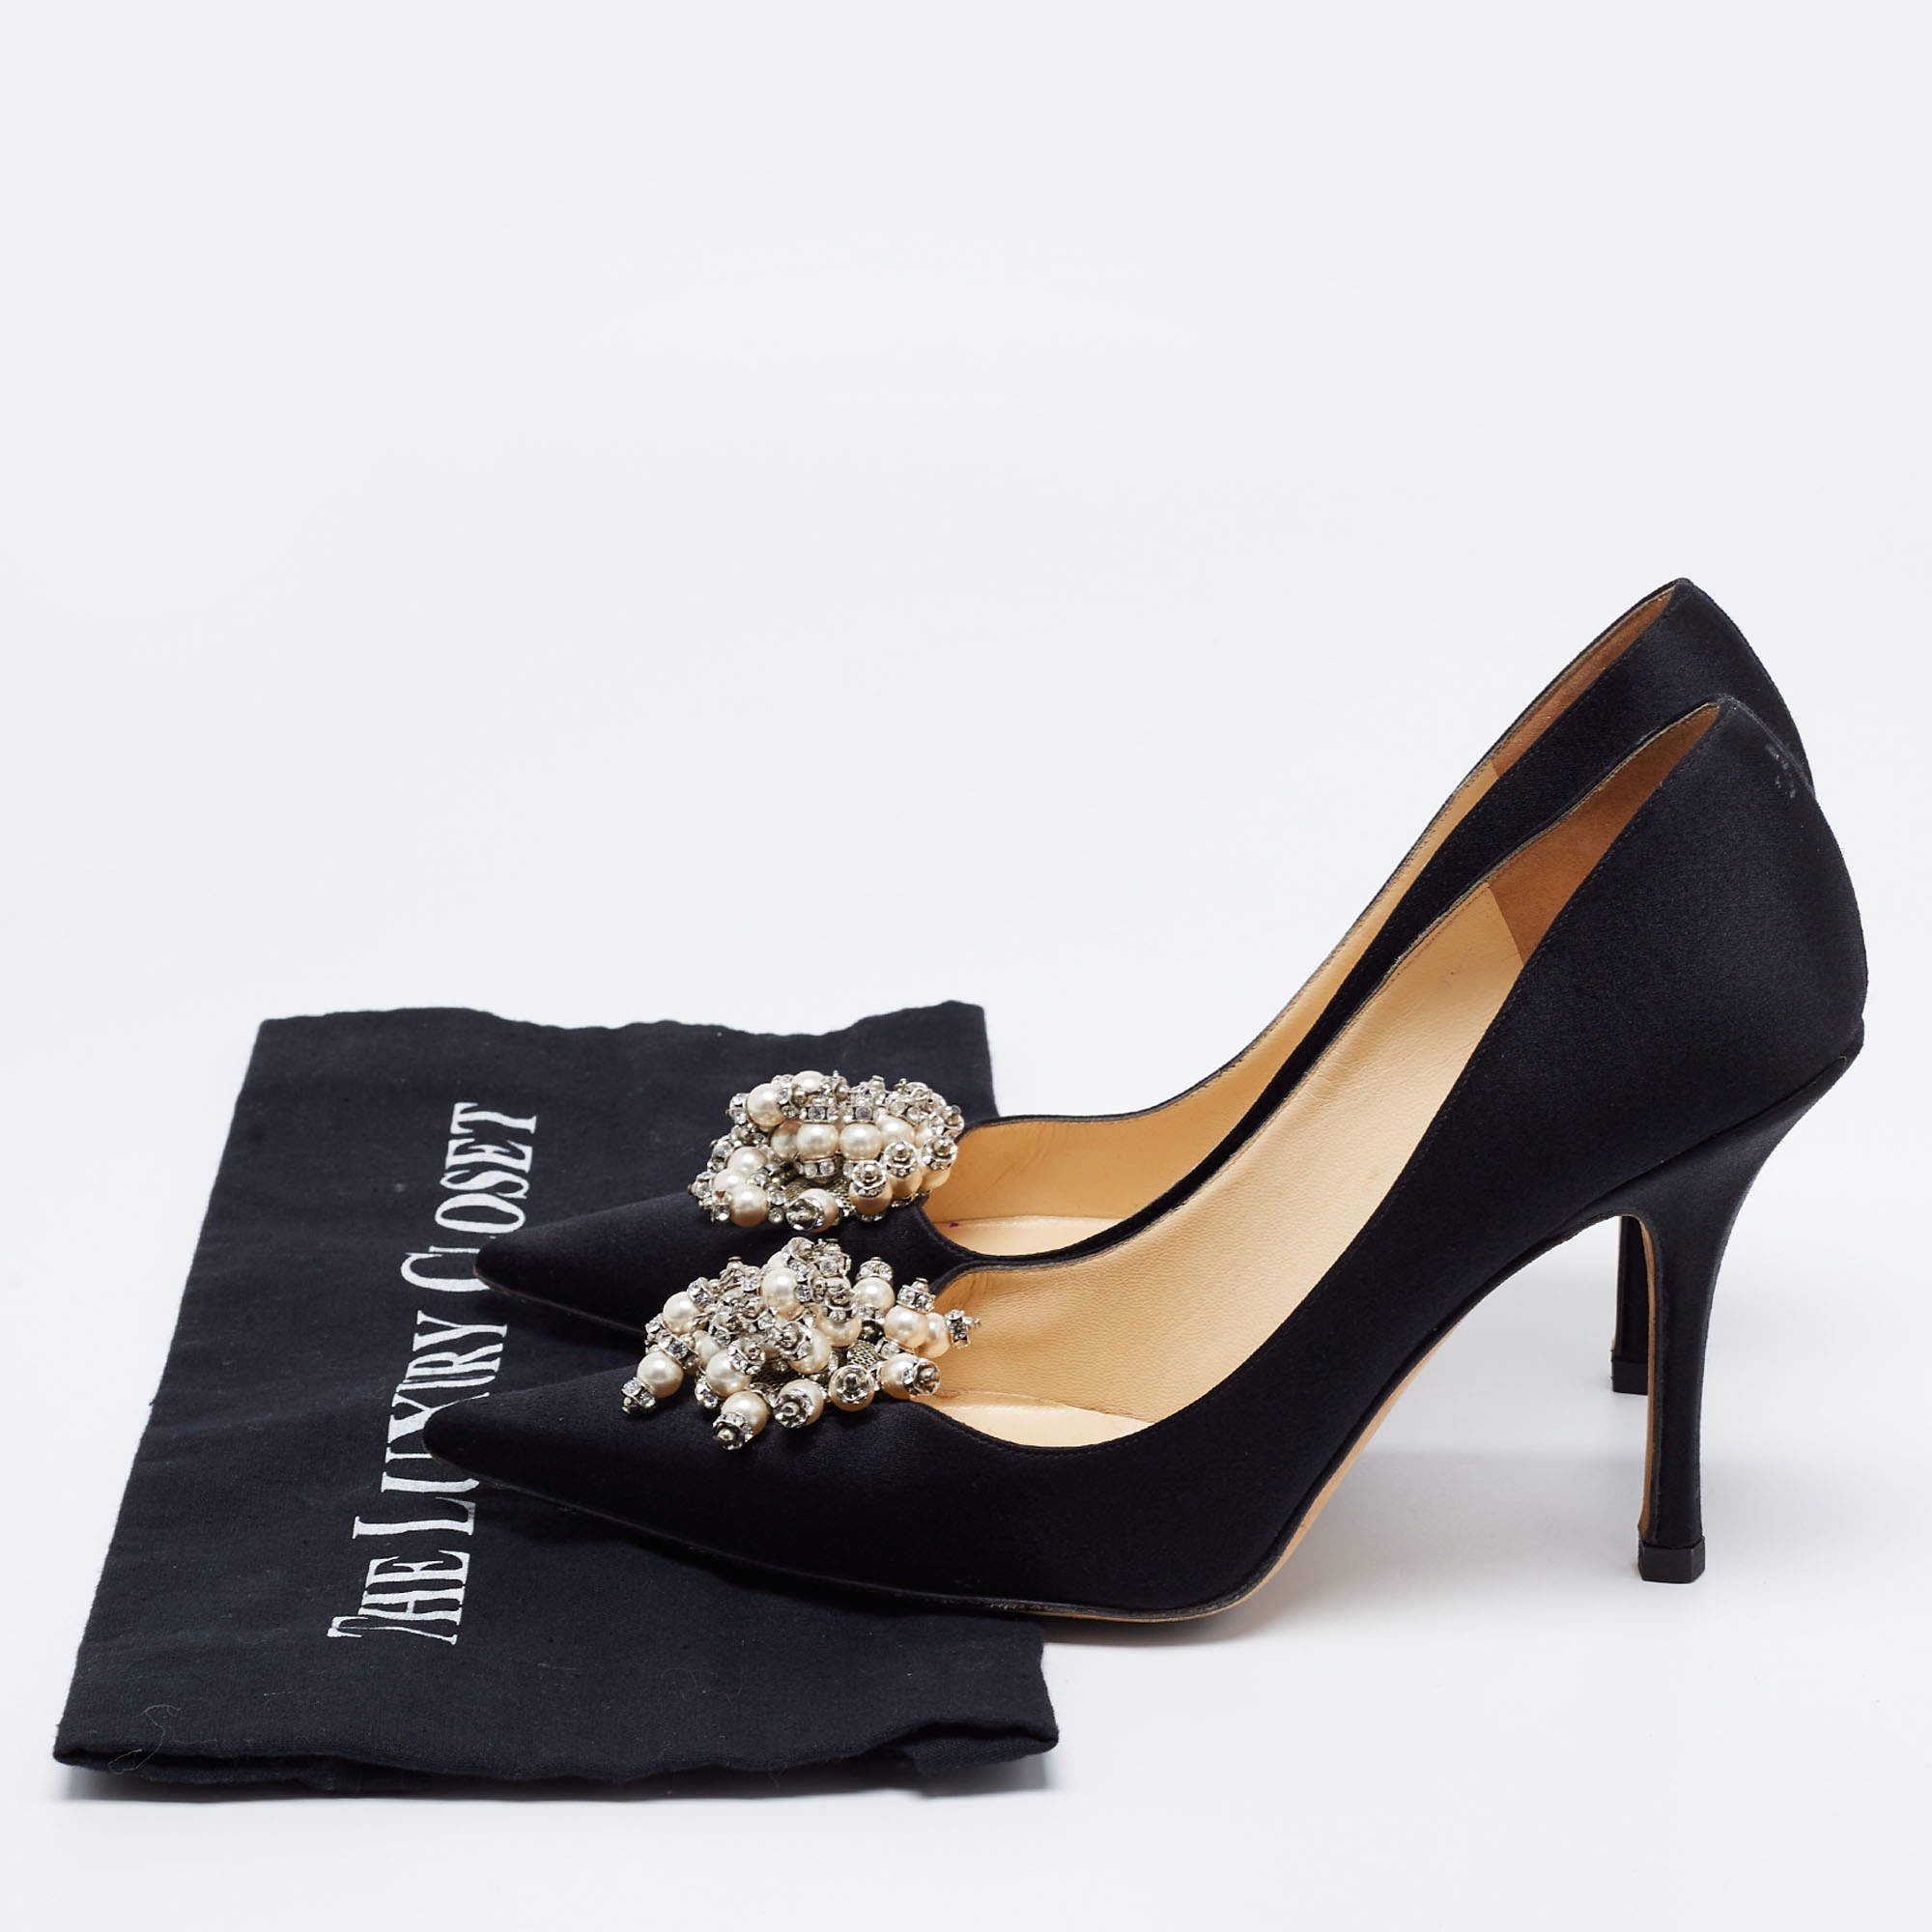 Buy Jimmy Choo Shoes Women online | Lazada.com.ph